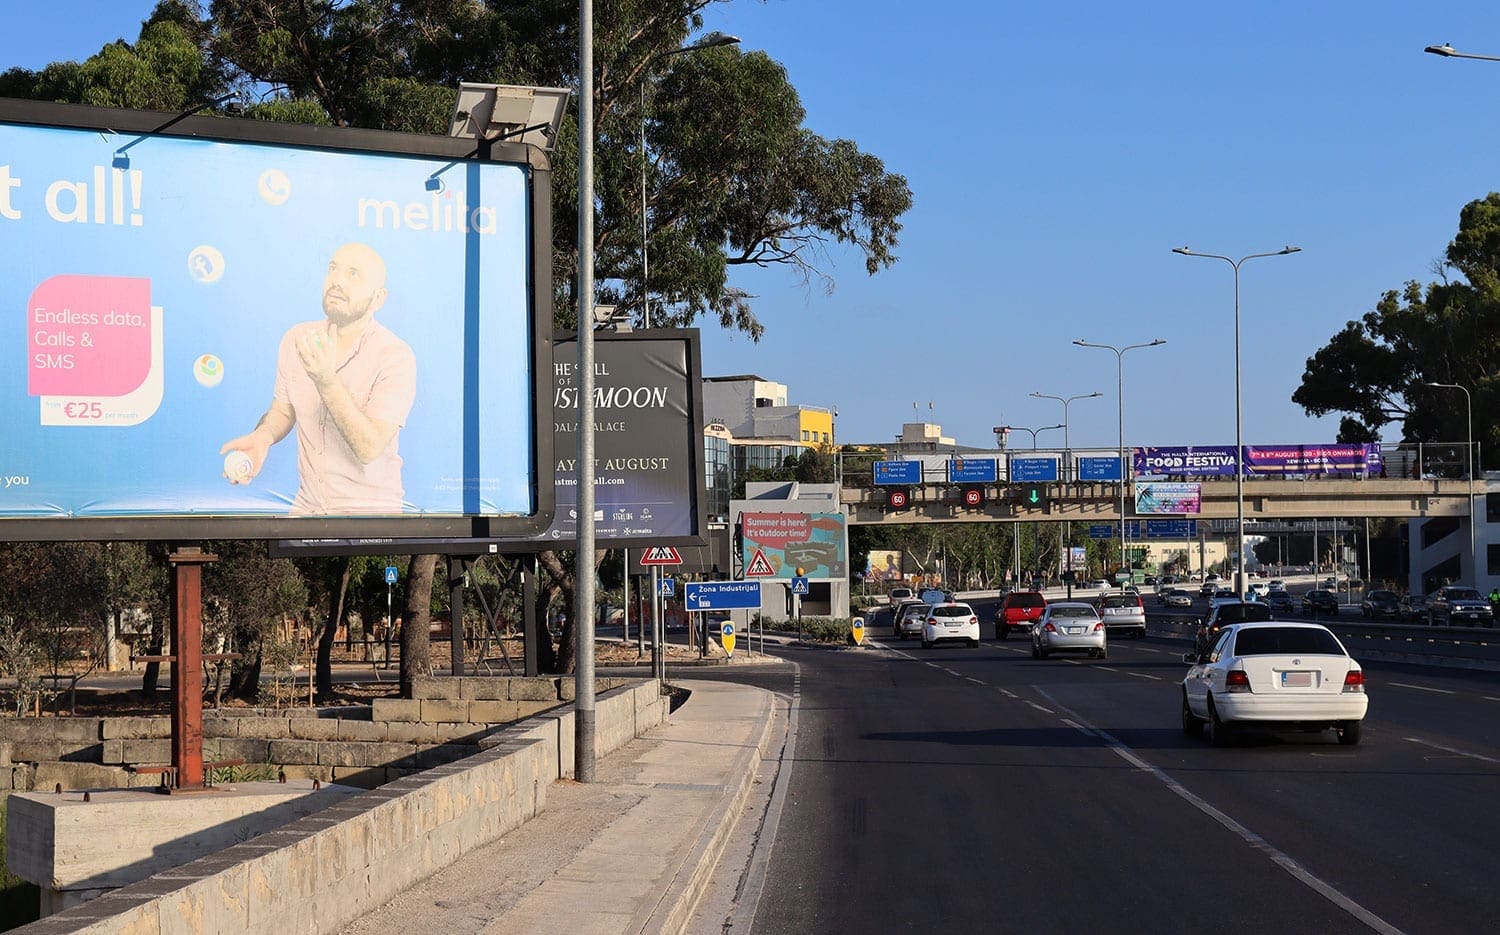 billboards. Visual pollution